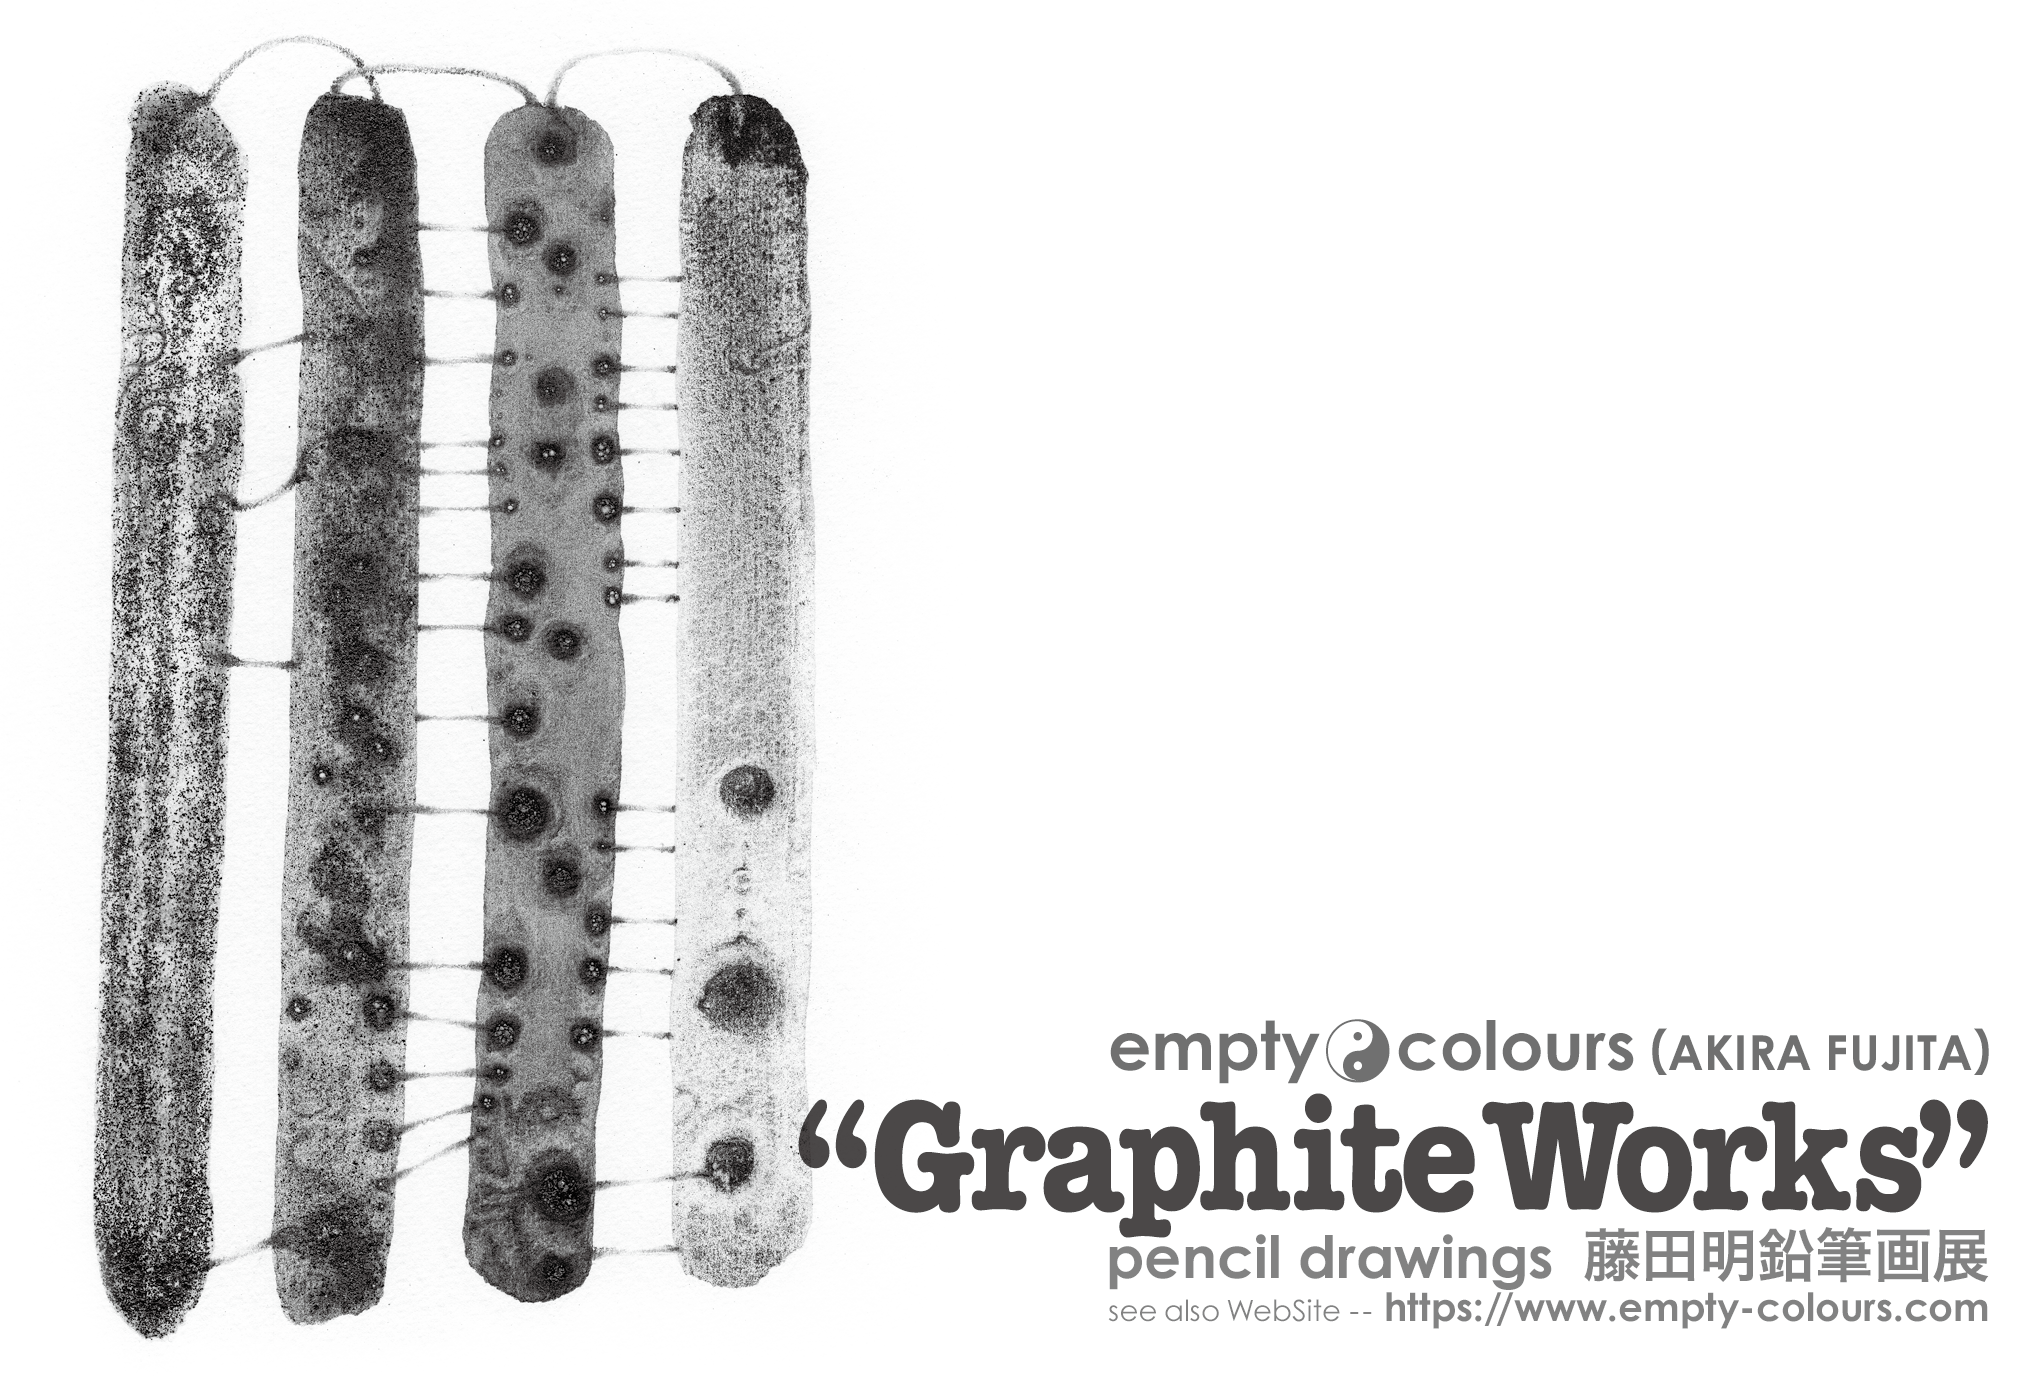 藤田明鉛筆画個展 "Graphite Works"